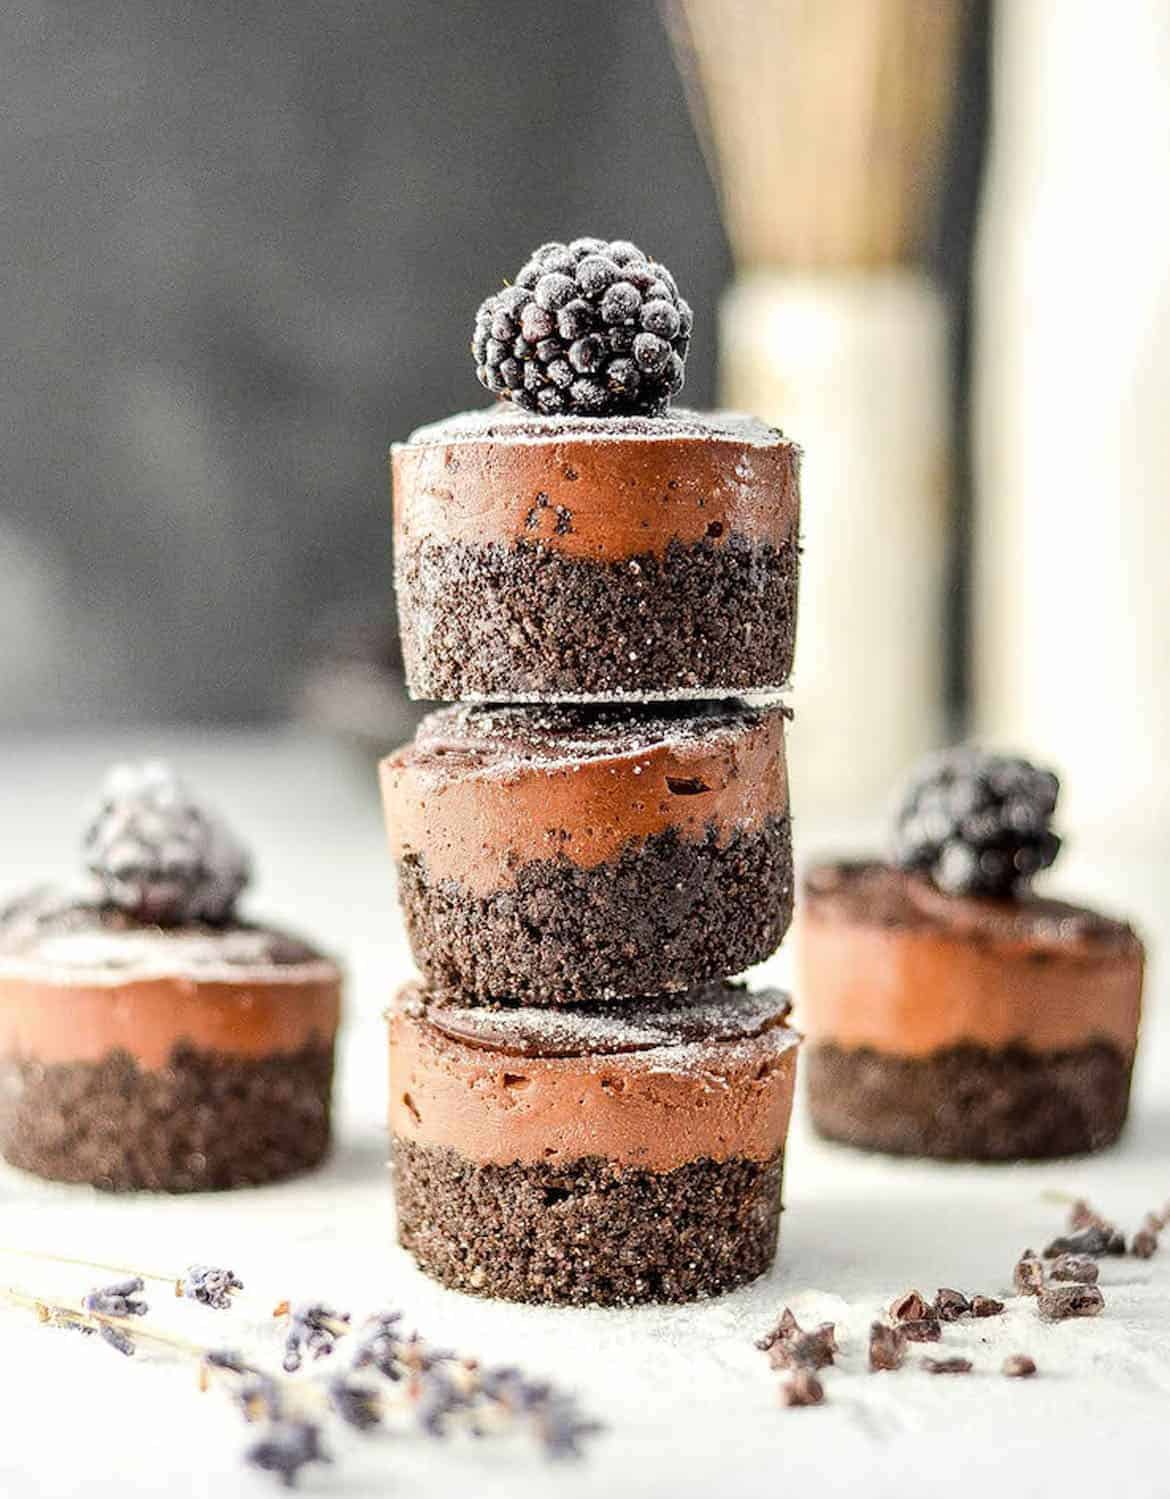  Four mini no-bake vegan chocolate cheesecake decorated with blackberries - Joy Food Sunshine: